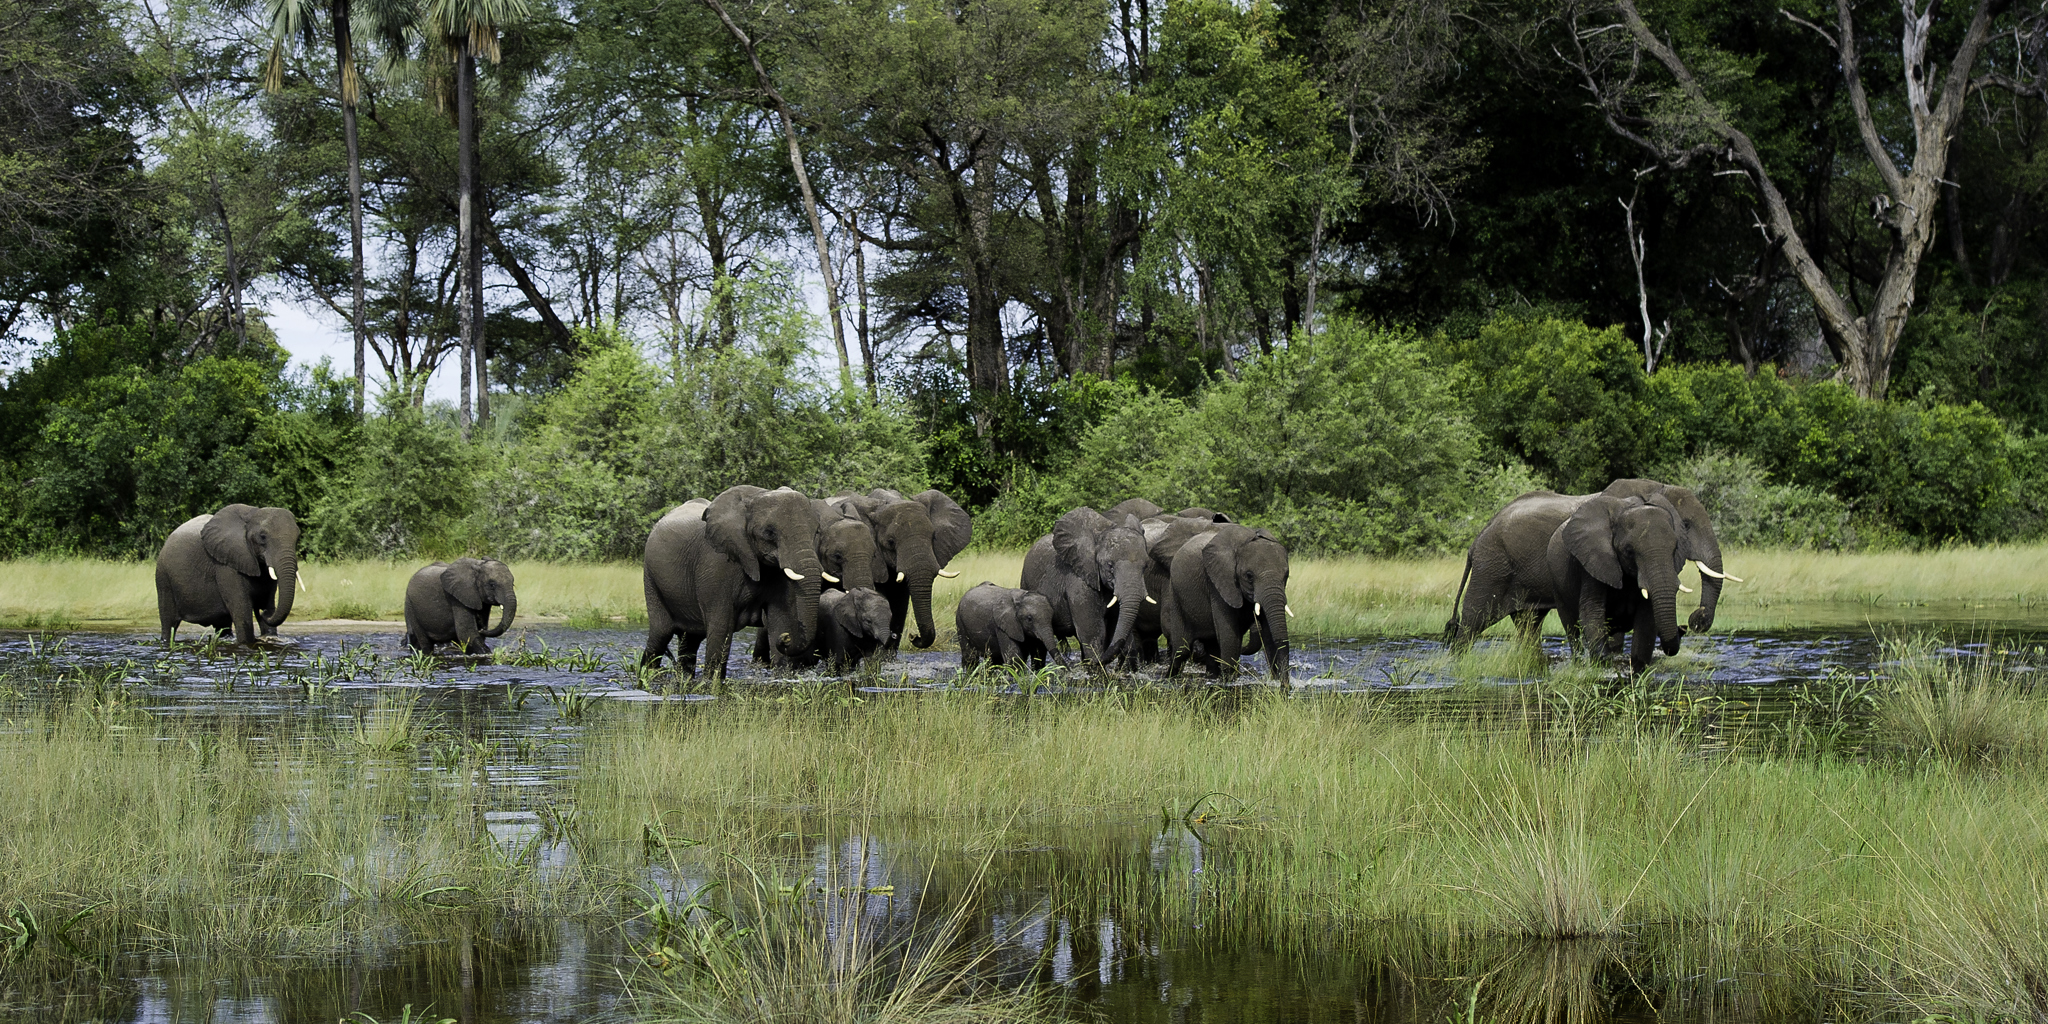 elephants in botswana, africa safari destinations 